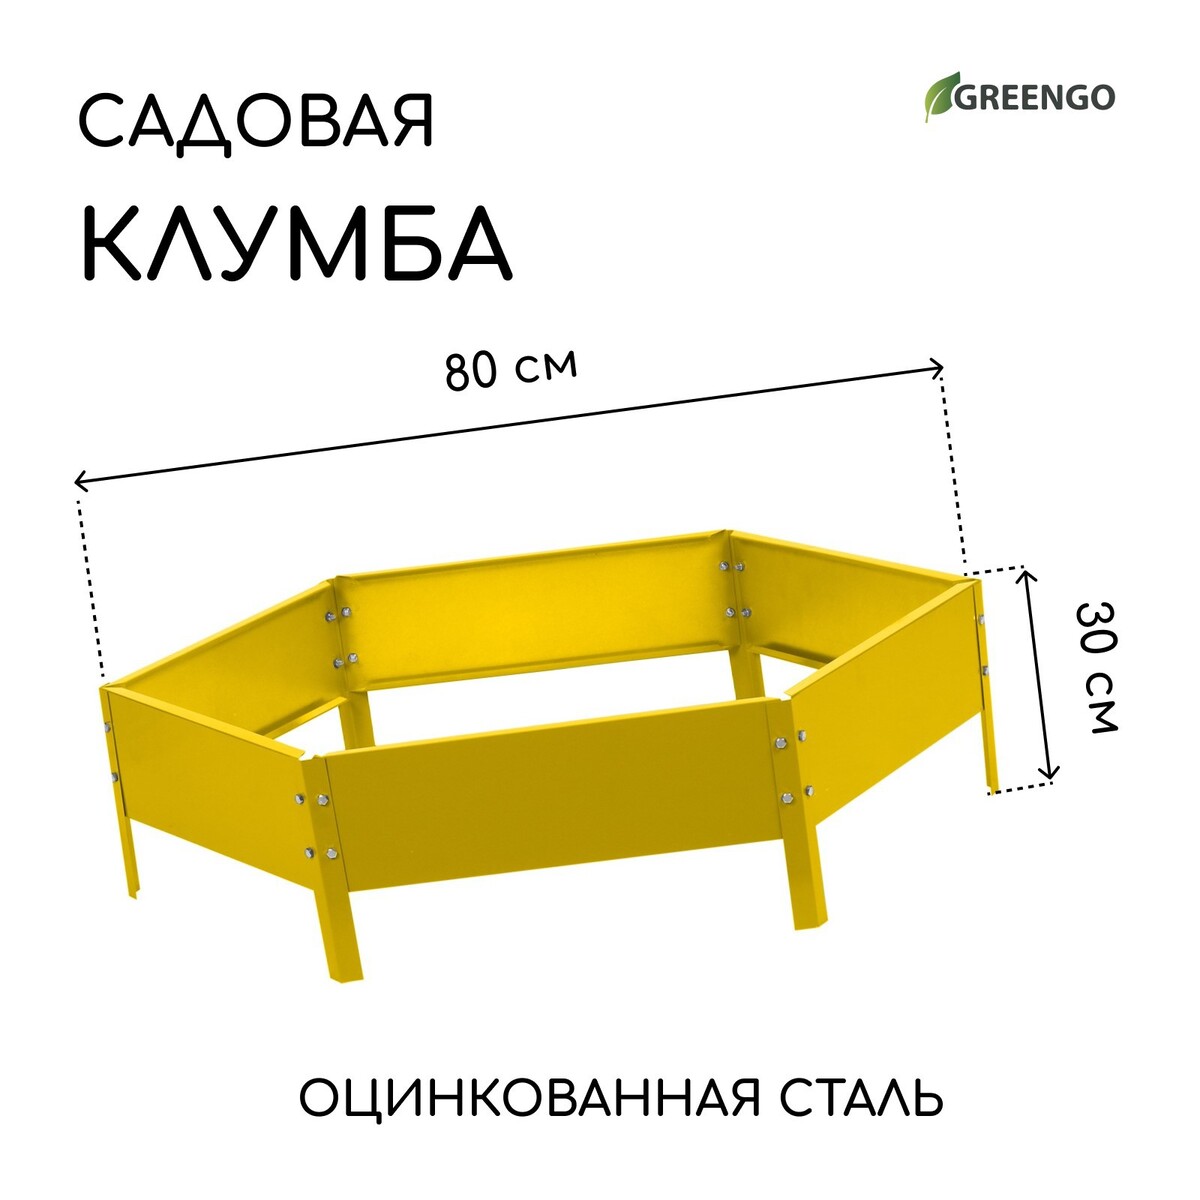 Клумба оцинкованная, d = 80 см, h = 15 см, желтая, greengo din рейка l 100 оцинкованная желтый